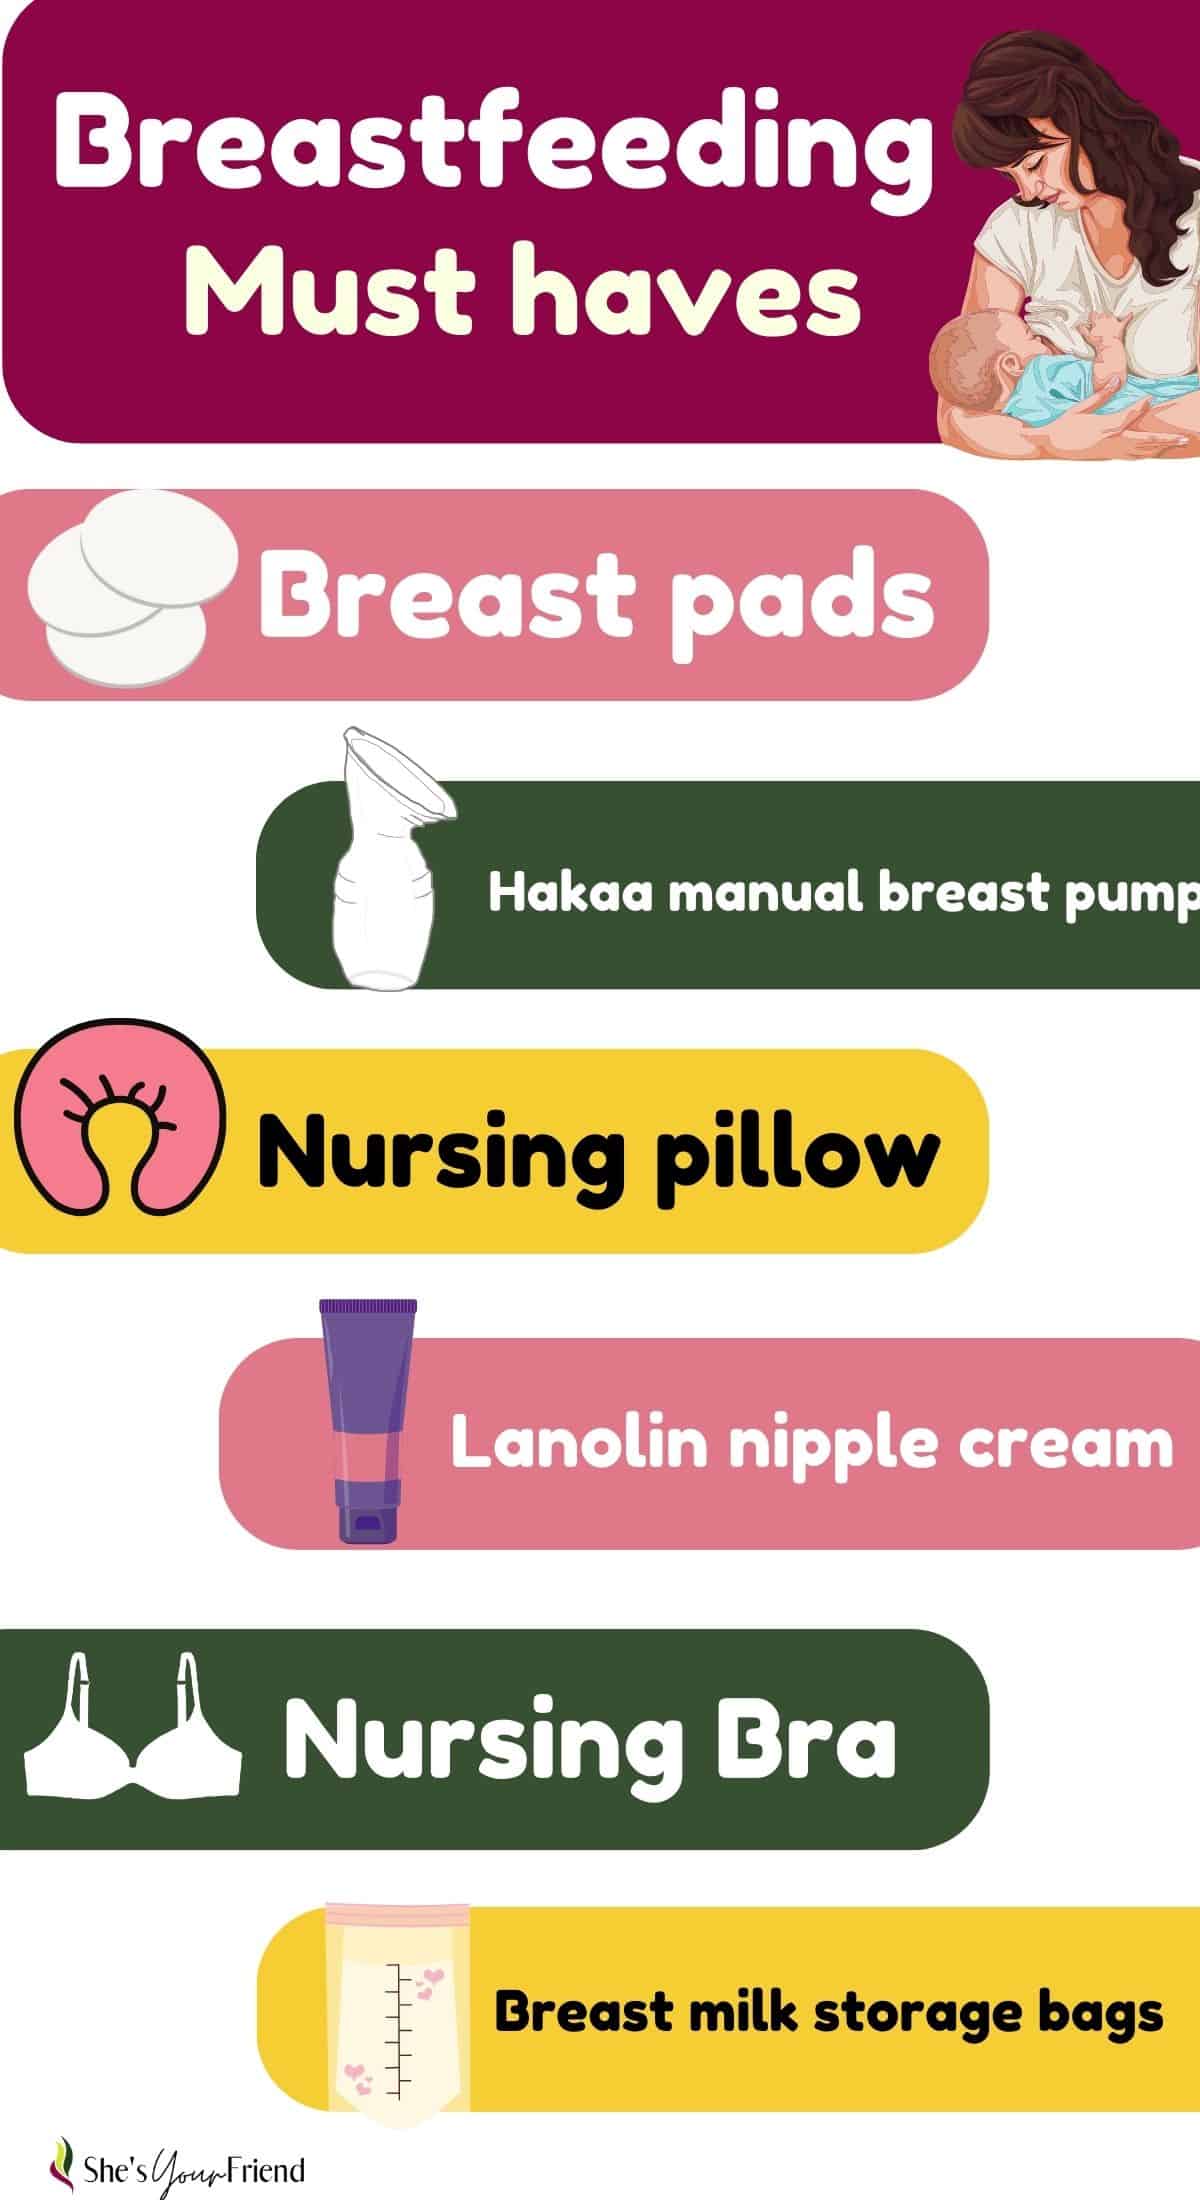 an infographic that says breastfeeding must haves breast pads Hakaa manual breast pump nursing pillow lanolin nipple cream nursing bra breast milk storage bags